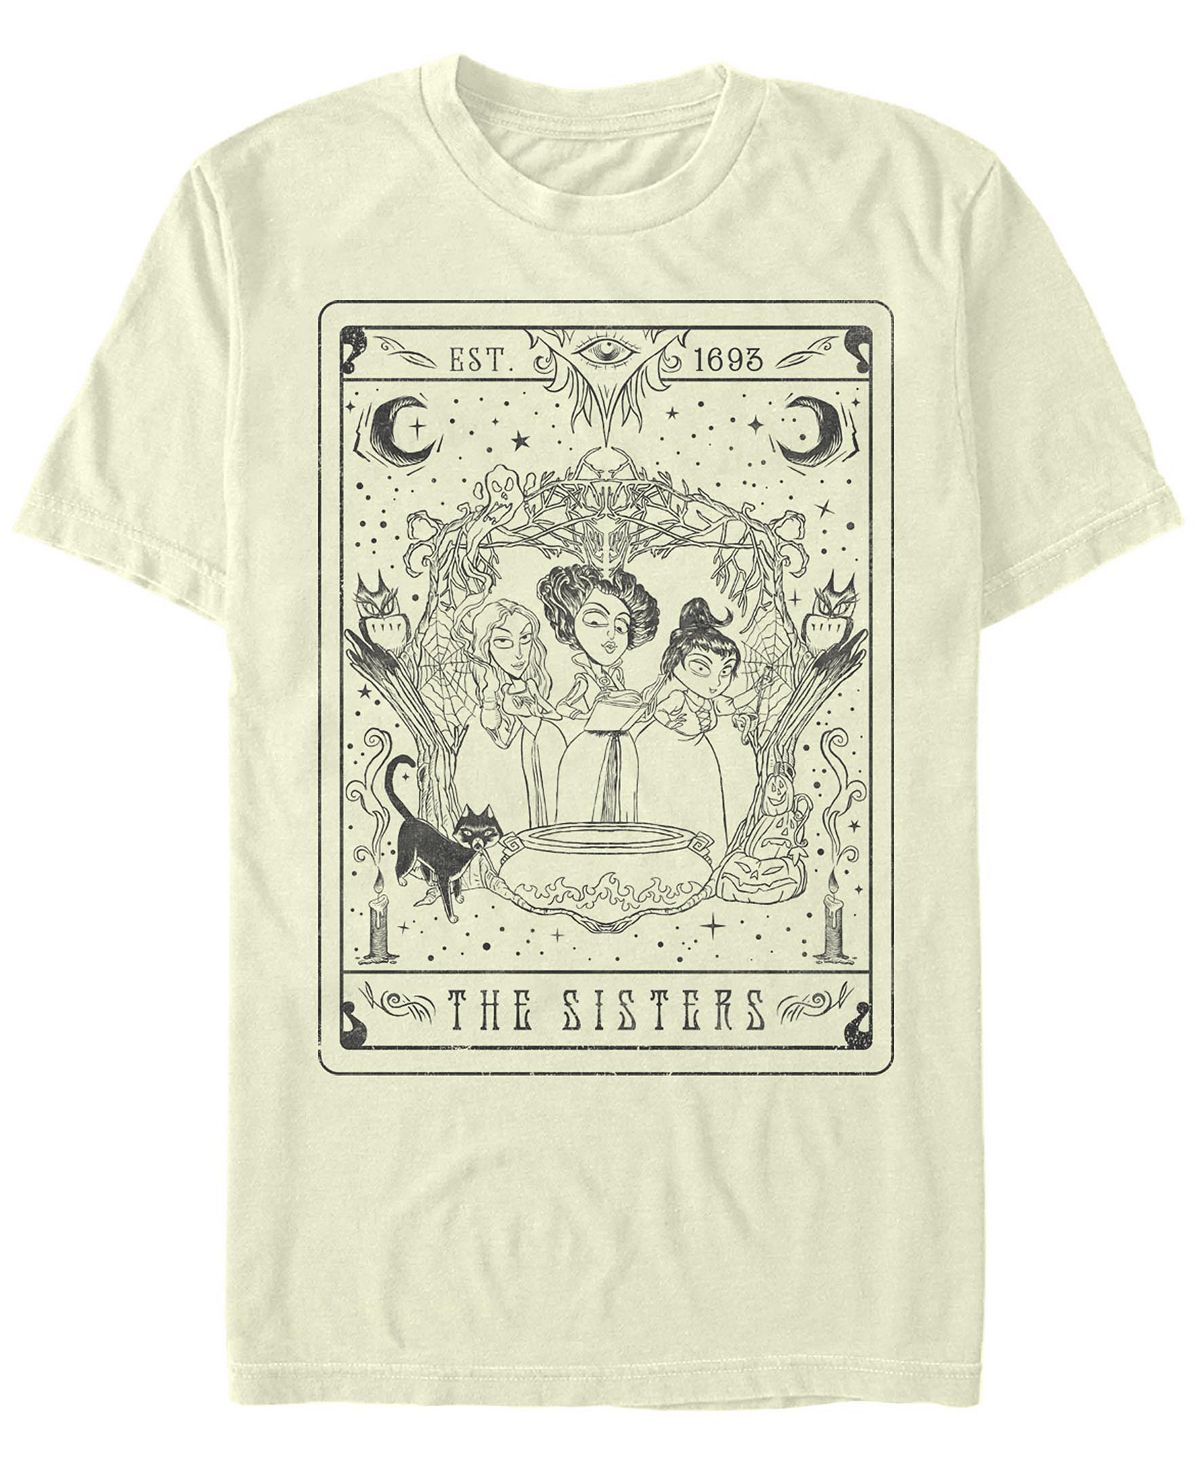 Мужская футболка с коротким рукавом hocus pocus the sisters tarot Fifth Sun фотографии